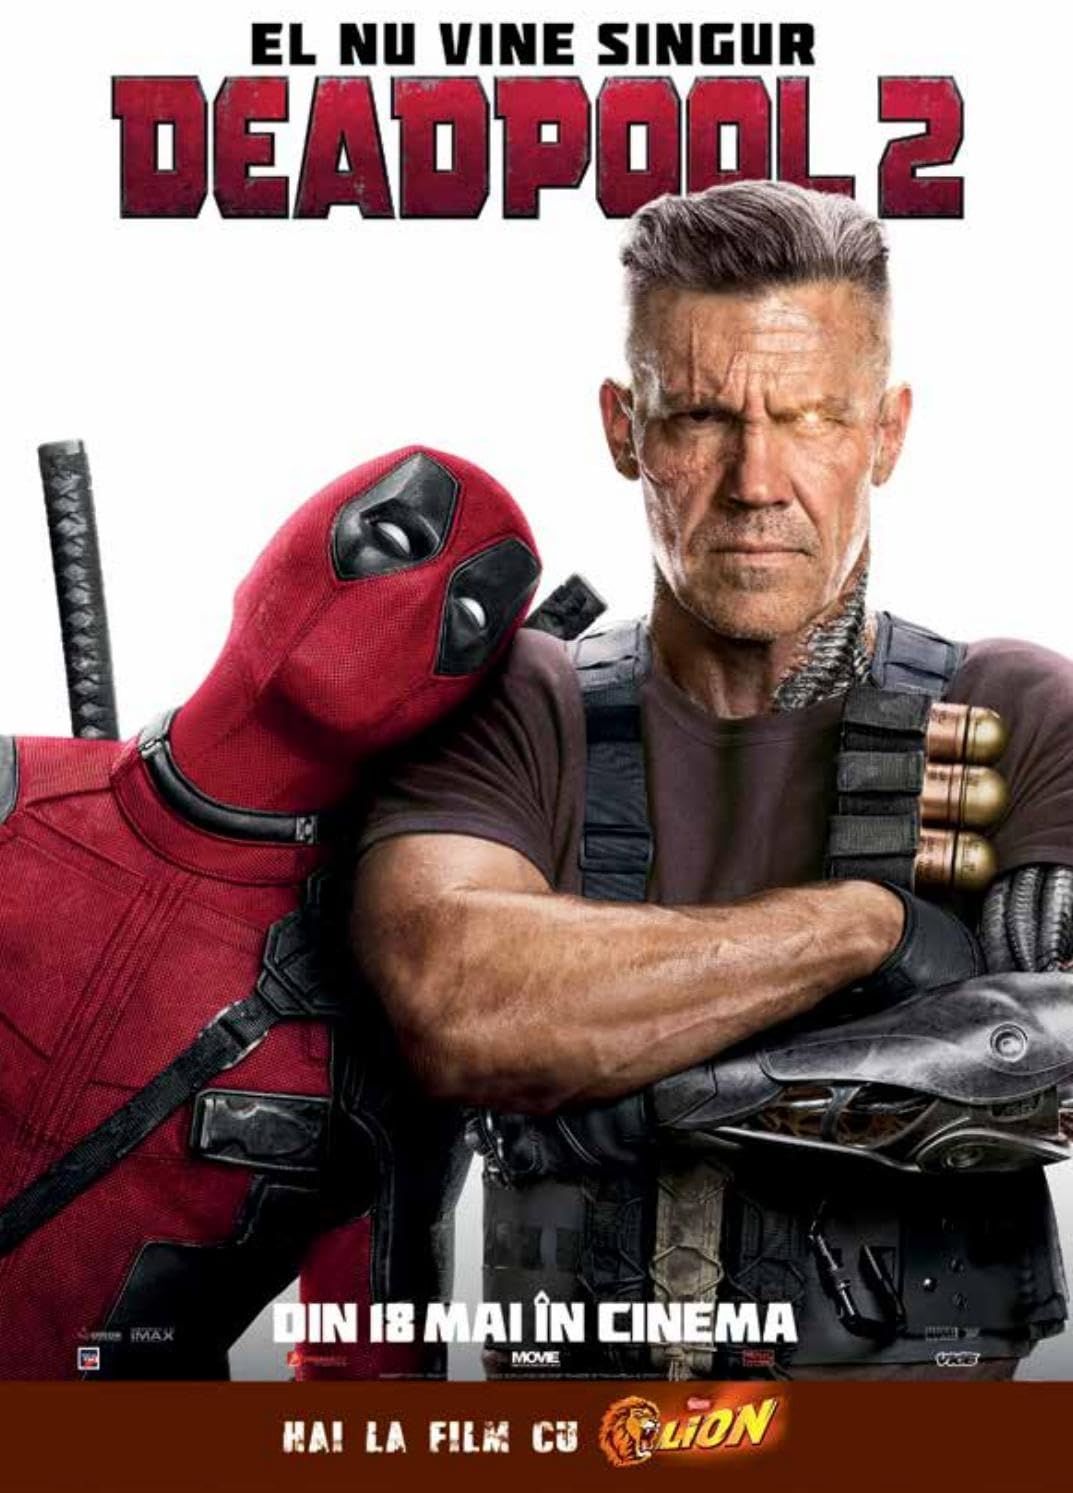 Deadpool 2 (2018) Hindi Dubbed Movie download full movie